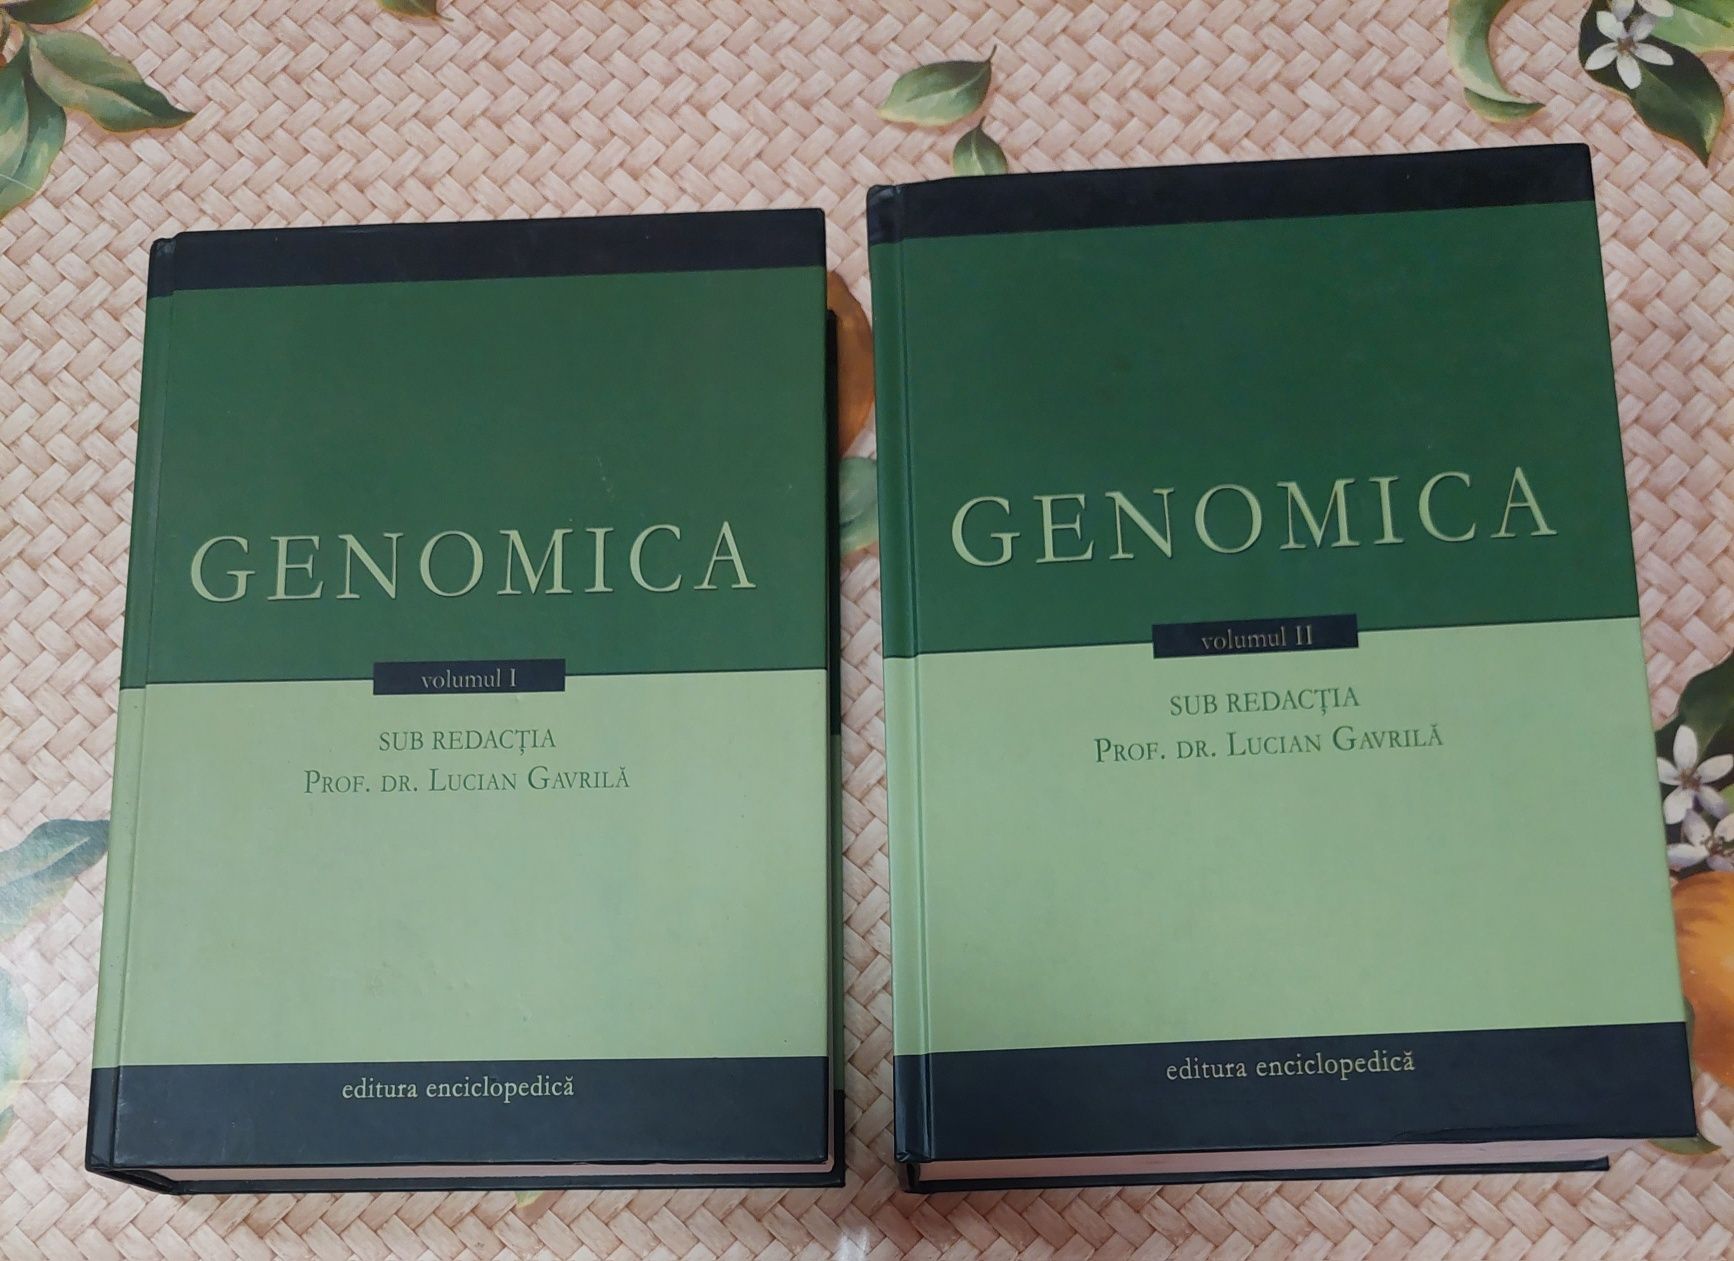 Genomica Prof. Dr. Lucian Gavrila